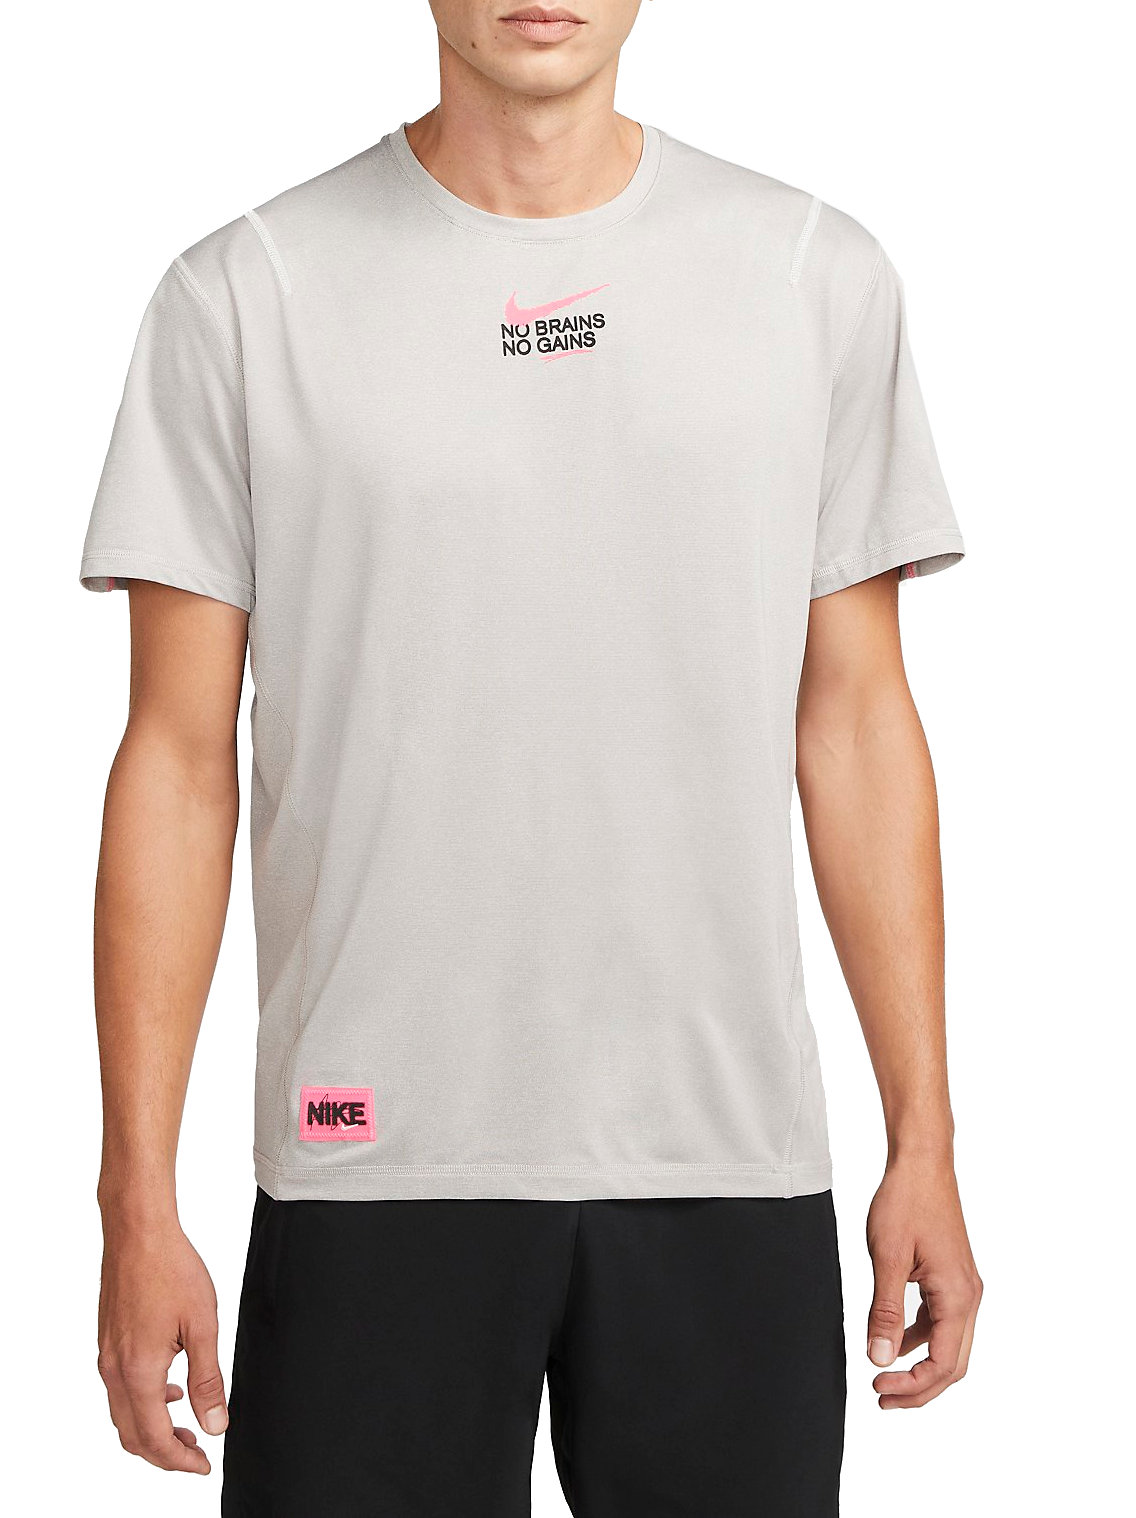 Tričko Nike Dri-FIT D.Y.E. Men s Short-Sleeve Fitness Top